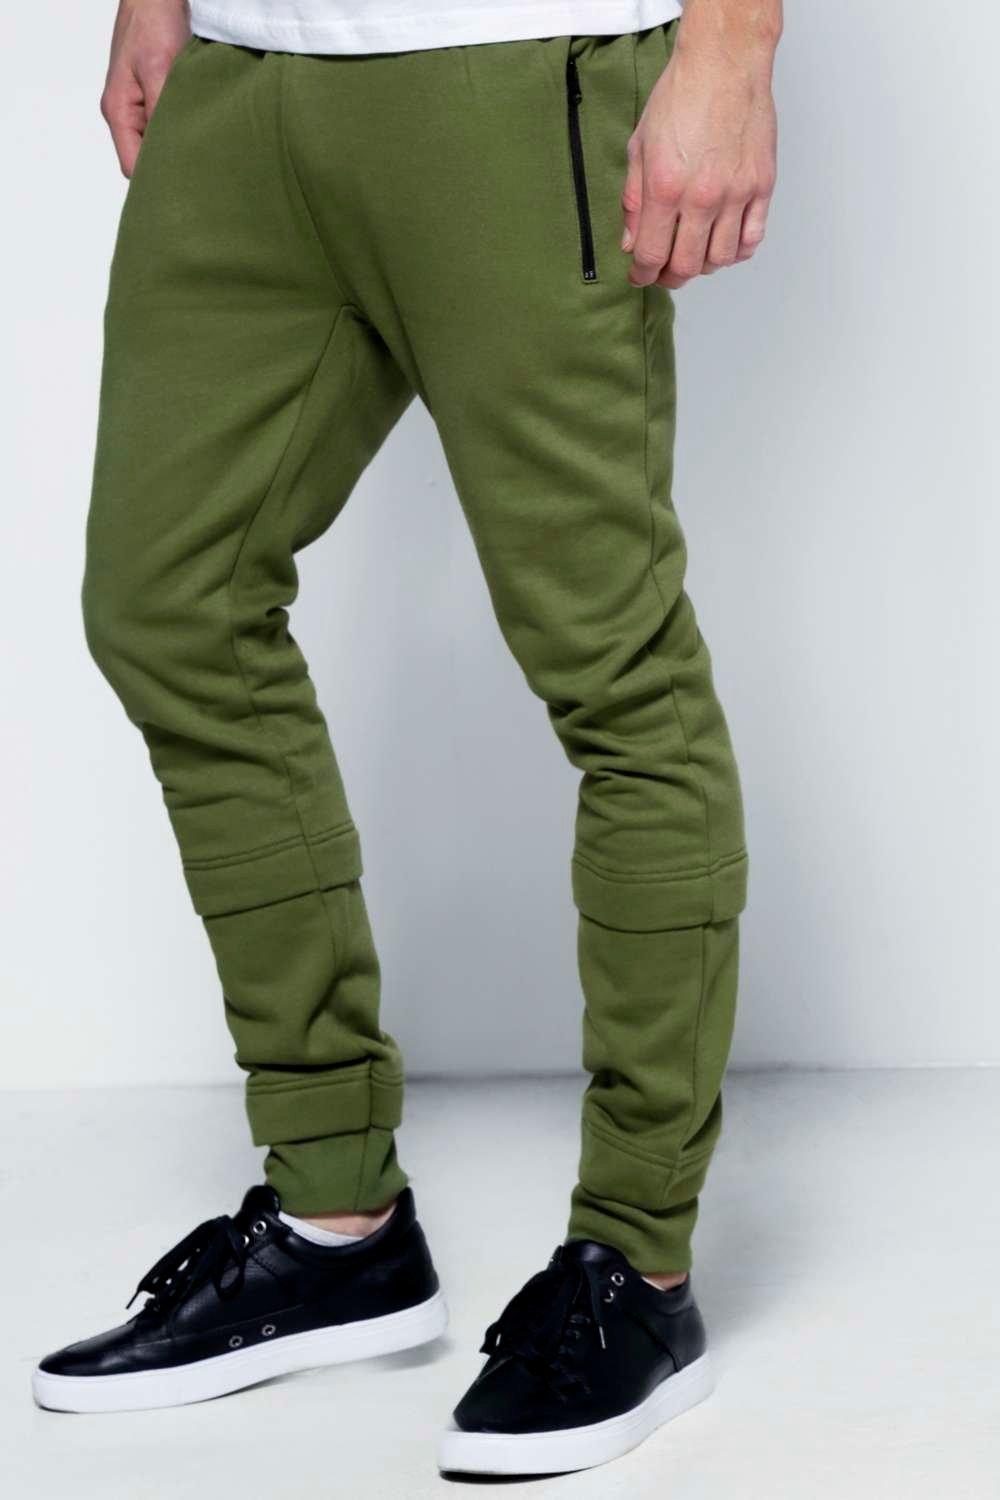 Boohoo Mens Drop Crotch Panelled Joggers | eBay